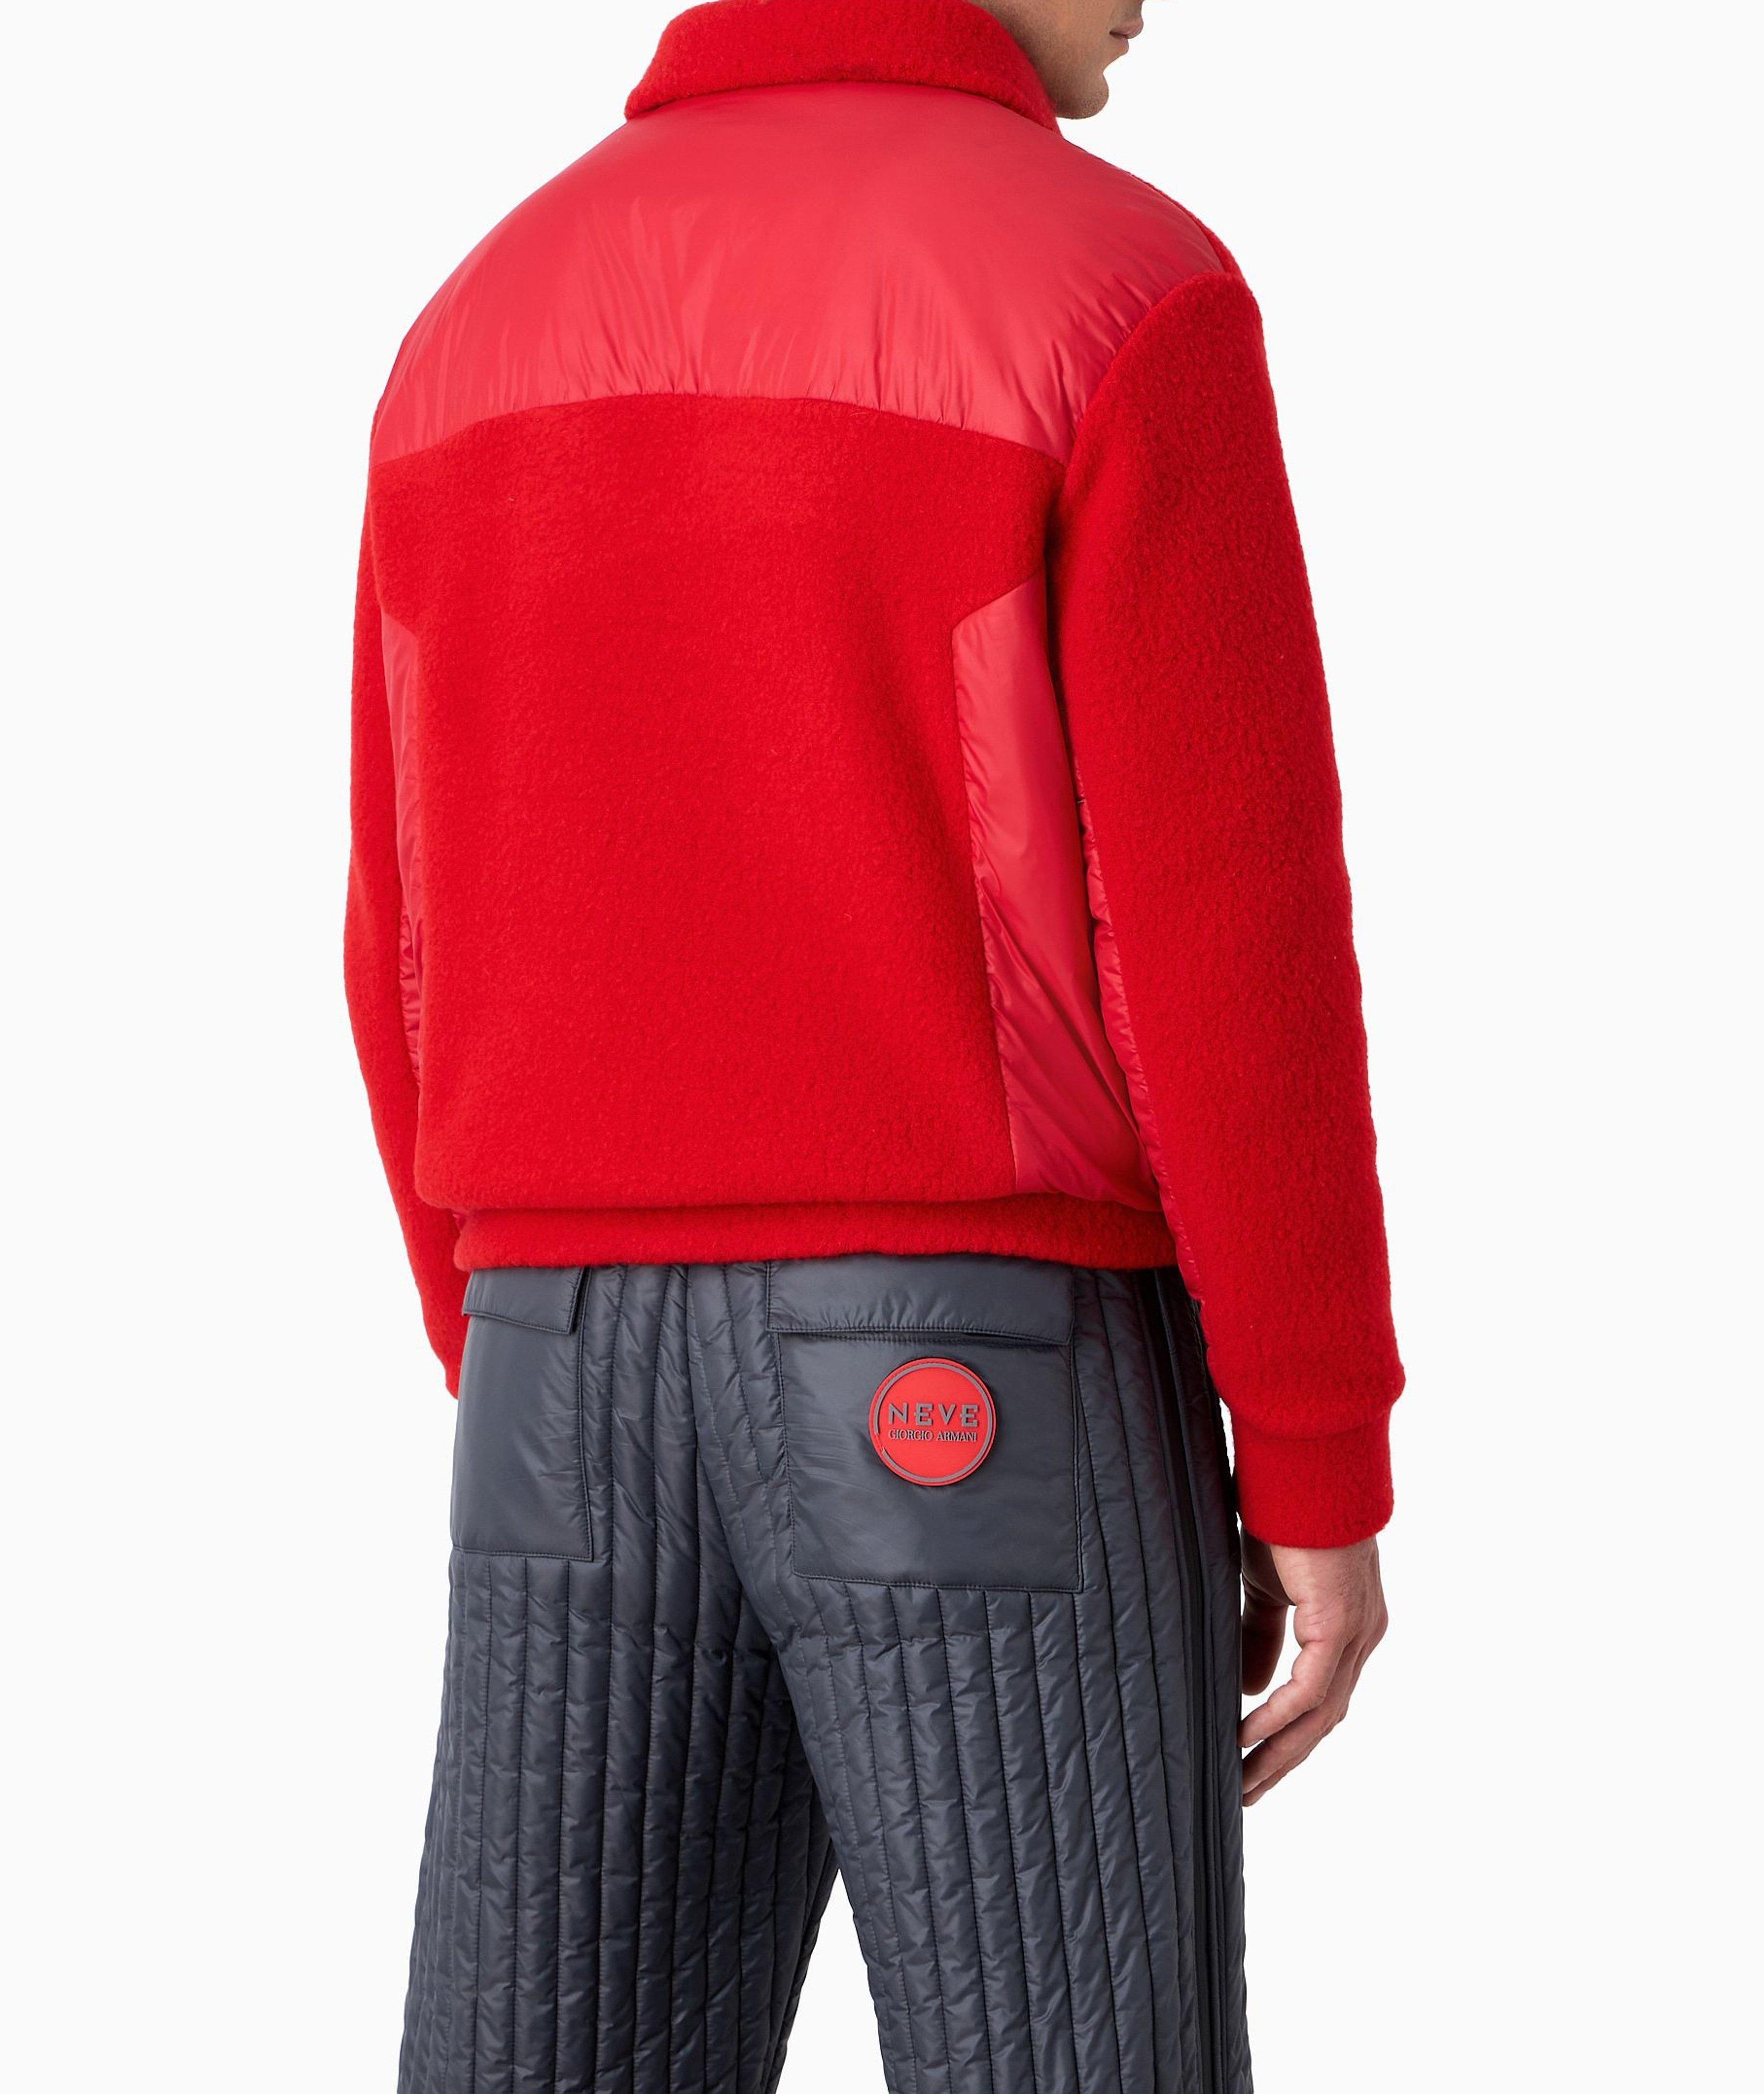 Giorgio Armani Neve stretch wool and cashmere leggings